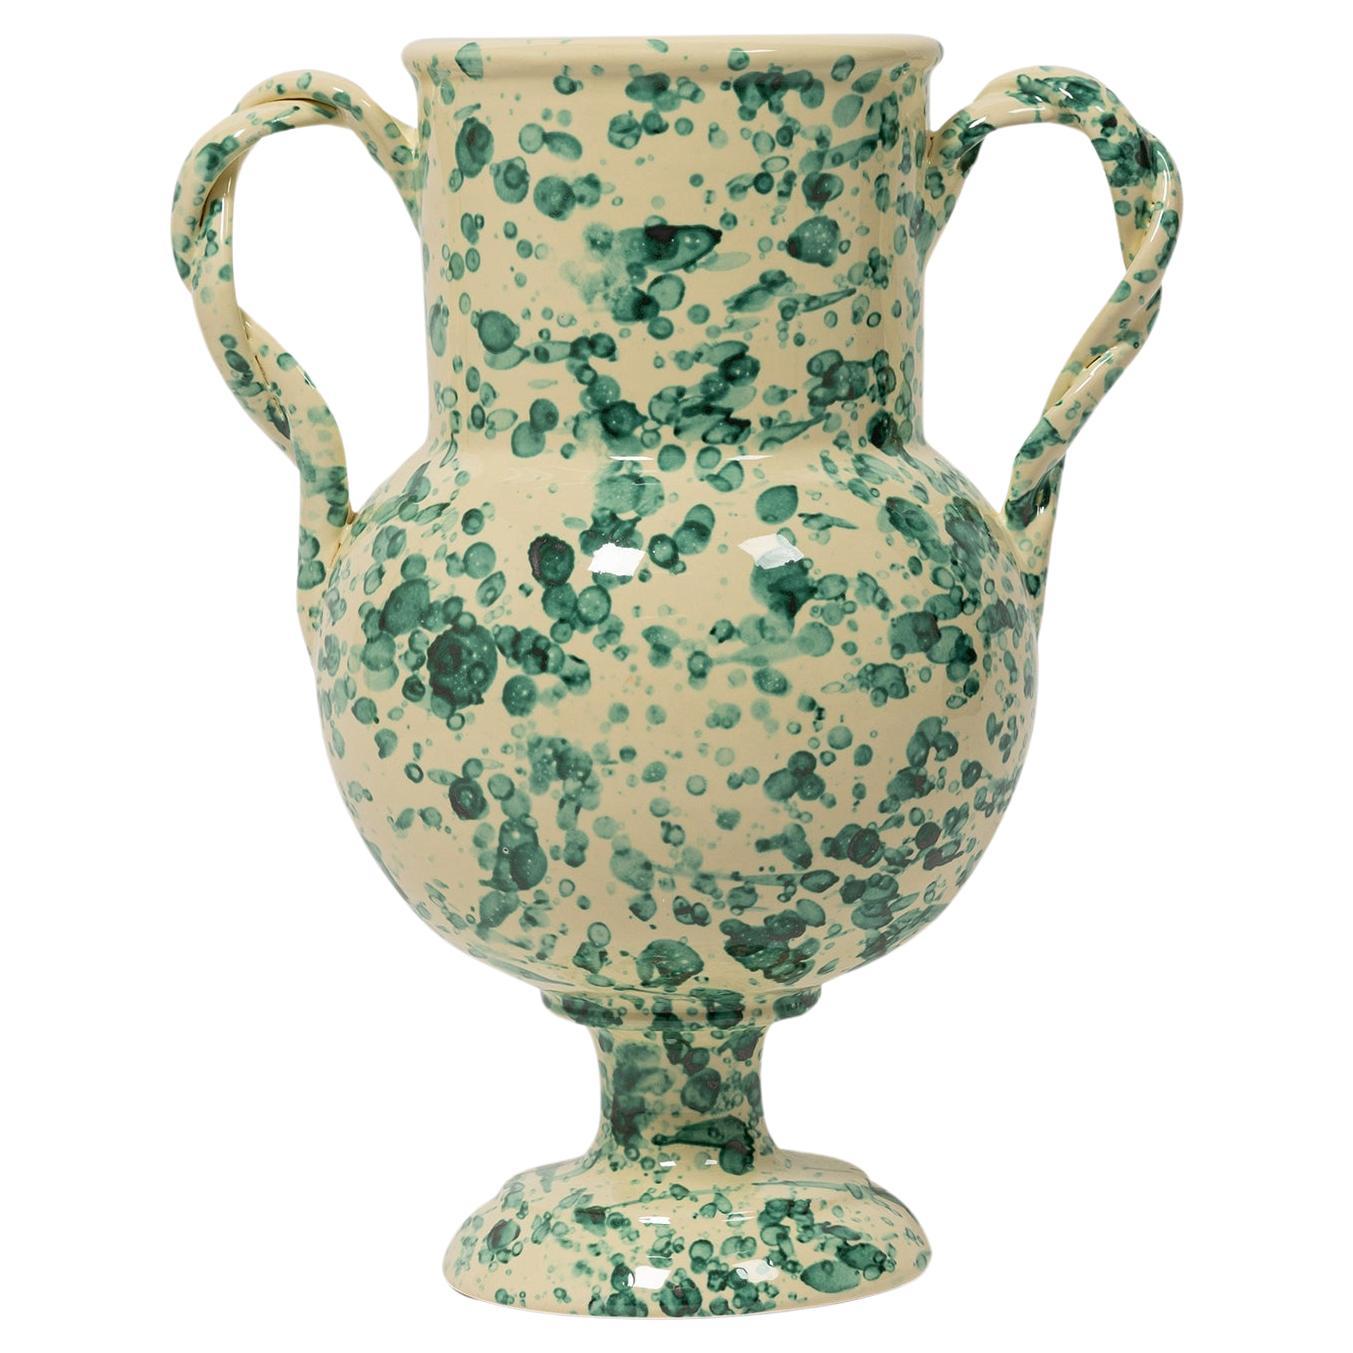 Splatter Vase, ceramic, greek urn inspired, Large, Green